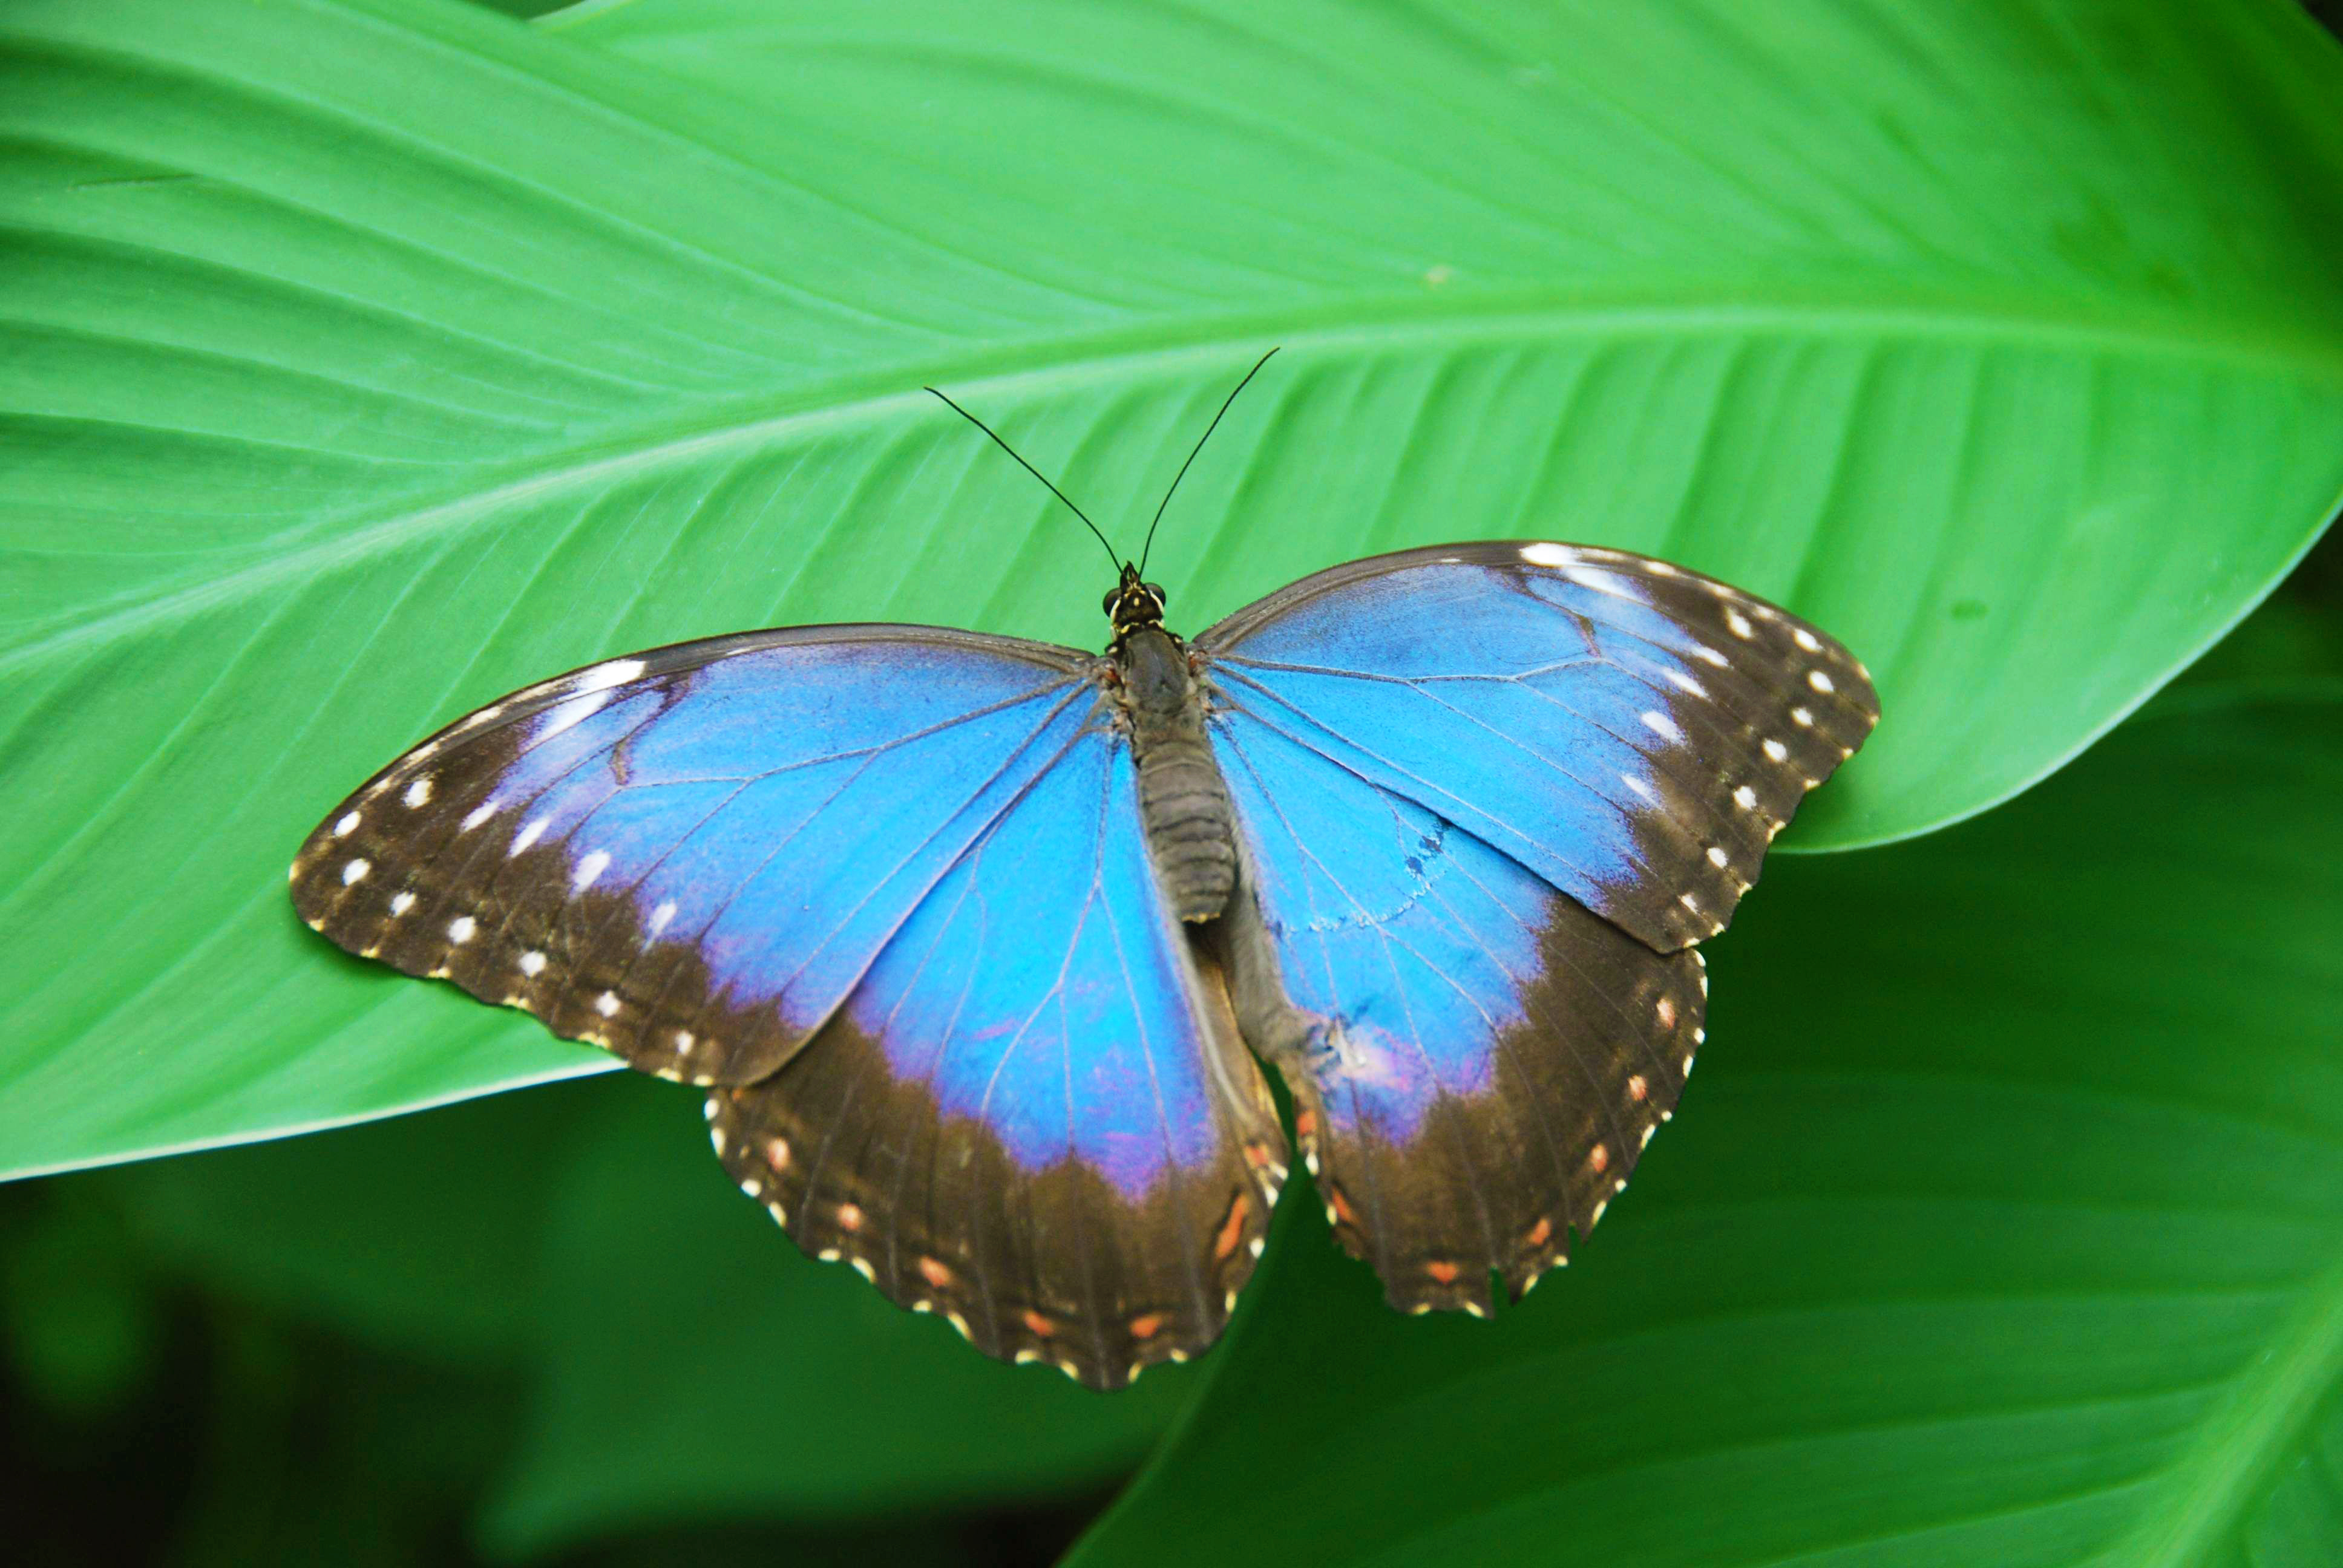 Morpho peleides-vlinder close-up met helderblauwe vleugels met een zwarte rand